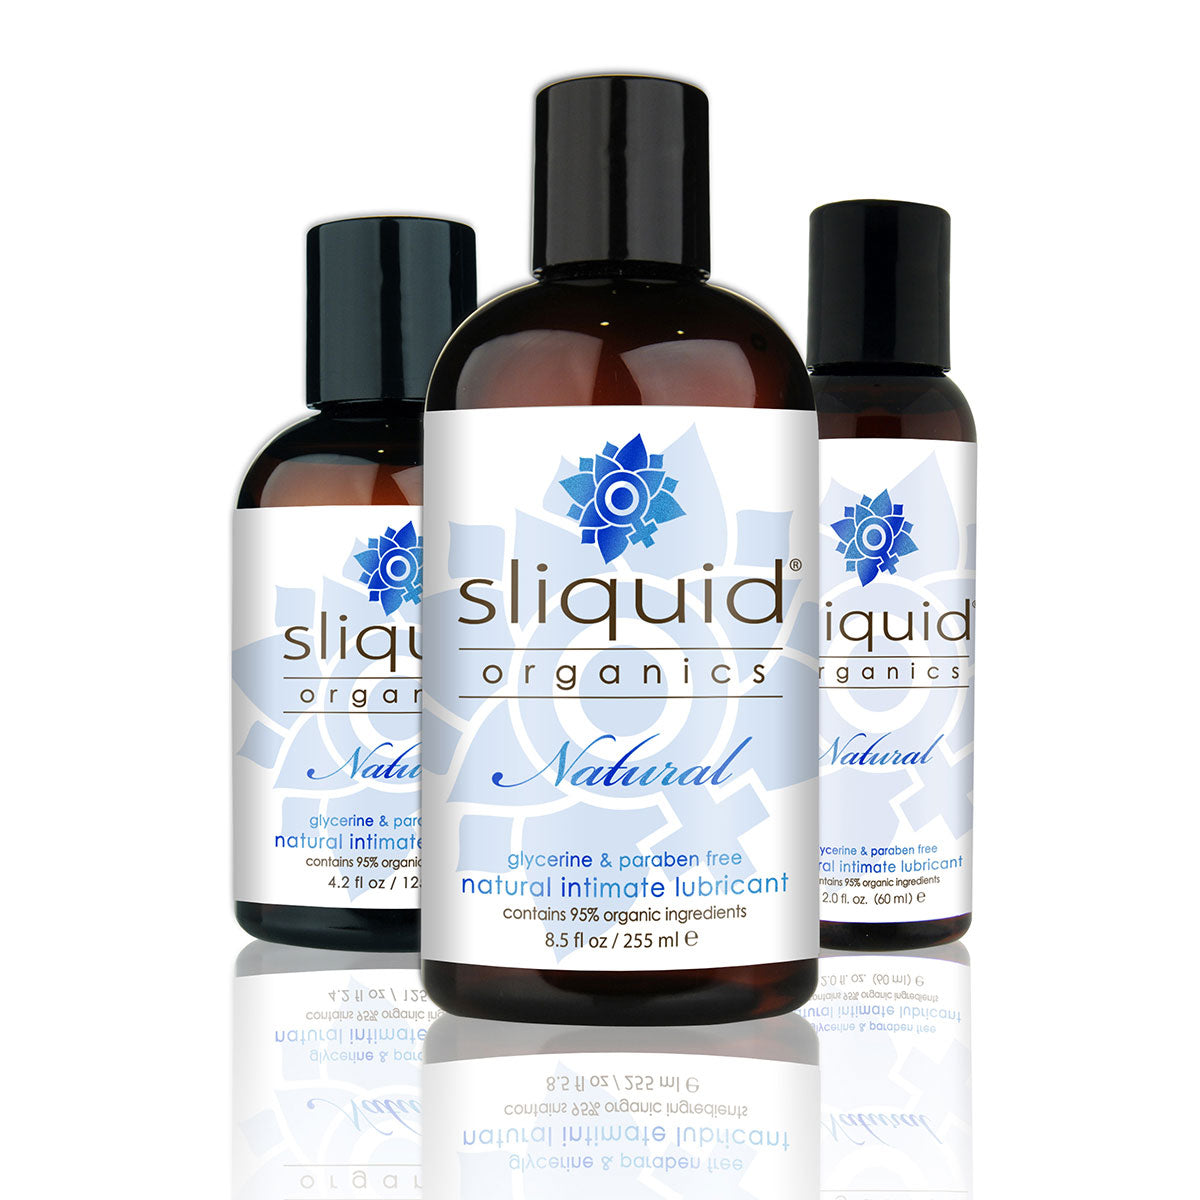 Sliquid Organics Natural - Cleanest Botanically Infused Water-Based Lubricant - 2oz